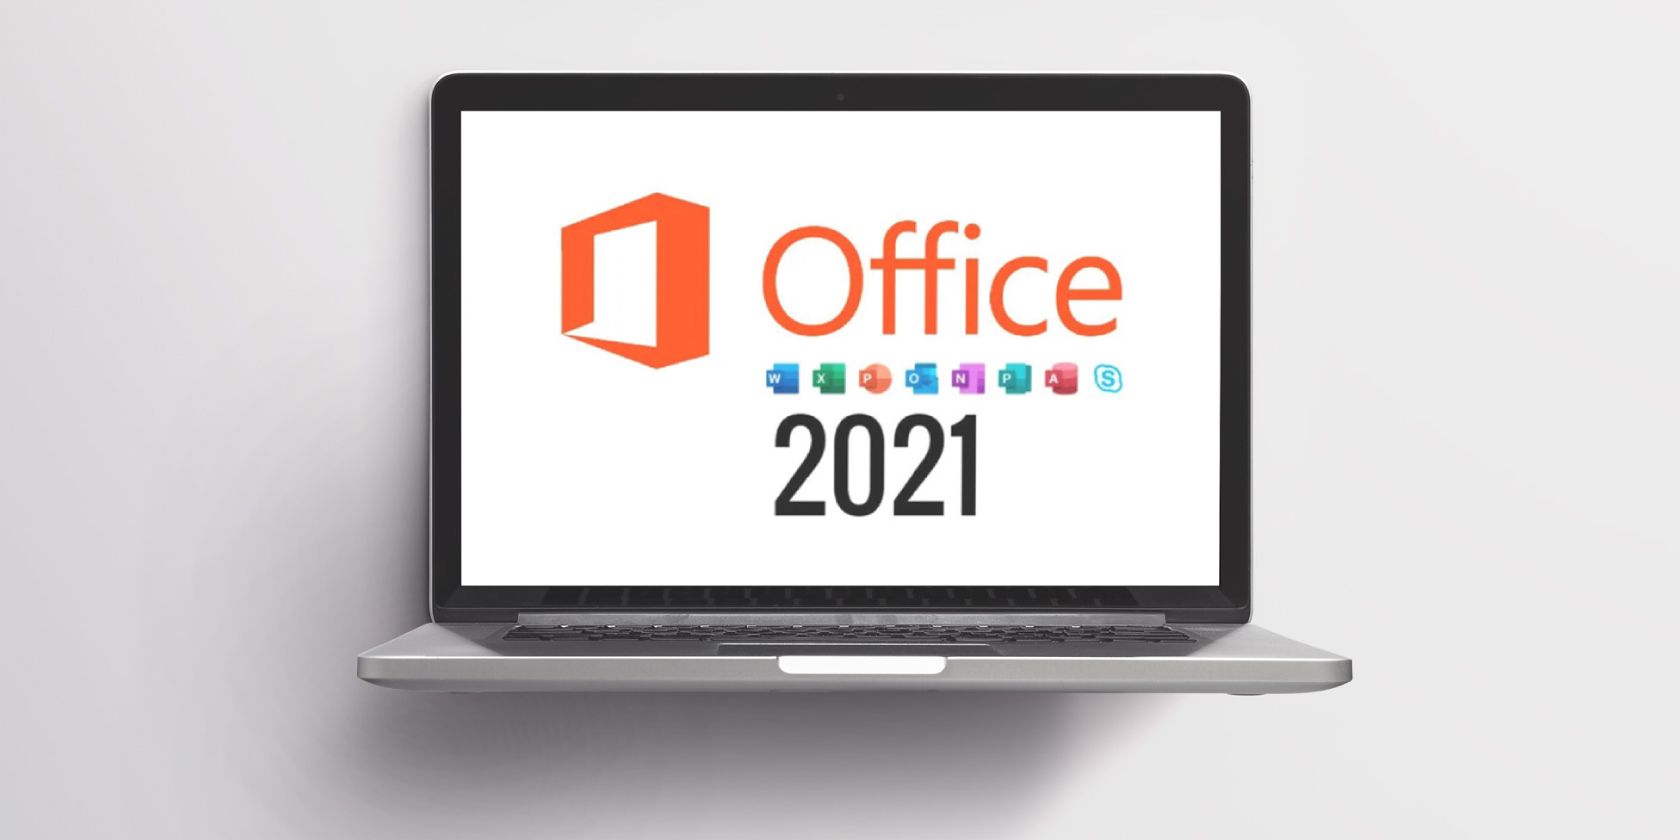 Офис 2021 года. Microsoft Office 2021. Office 2021 стоимость. Office 2021 Home and Business.